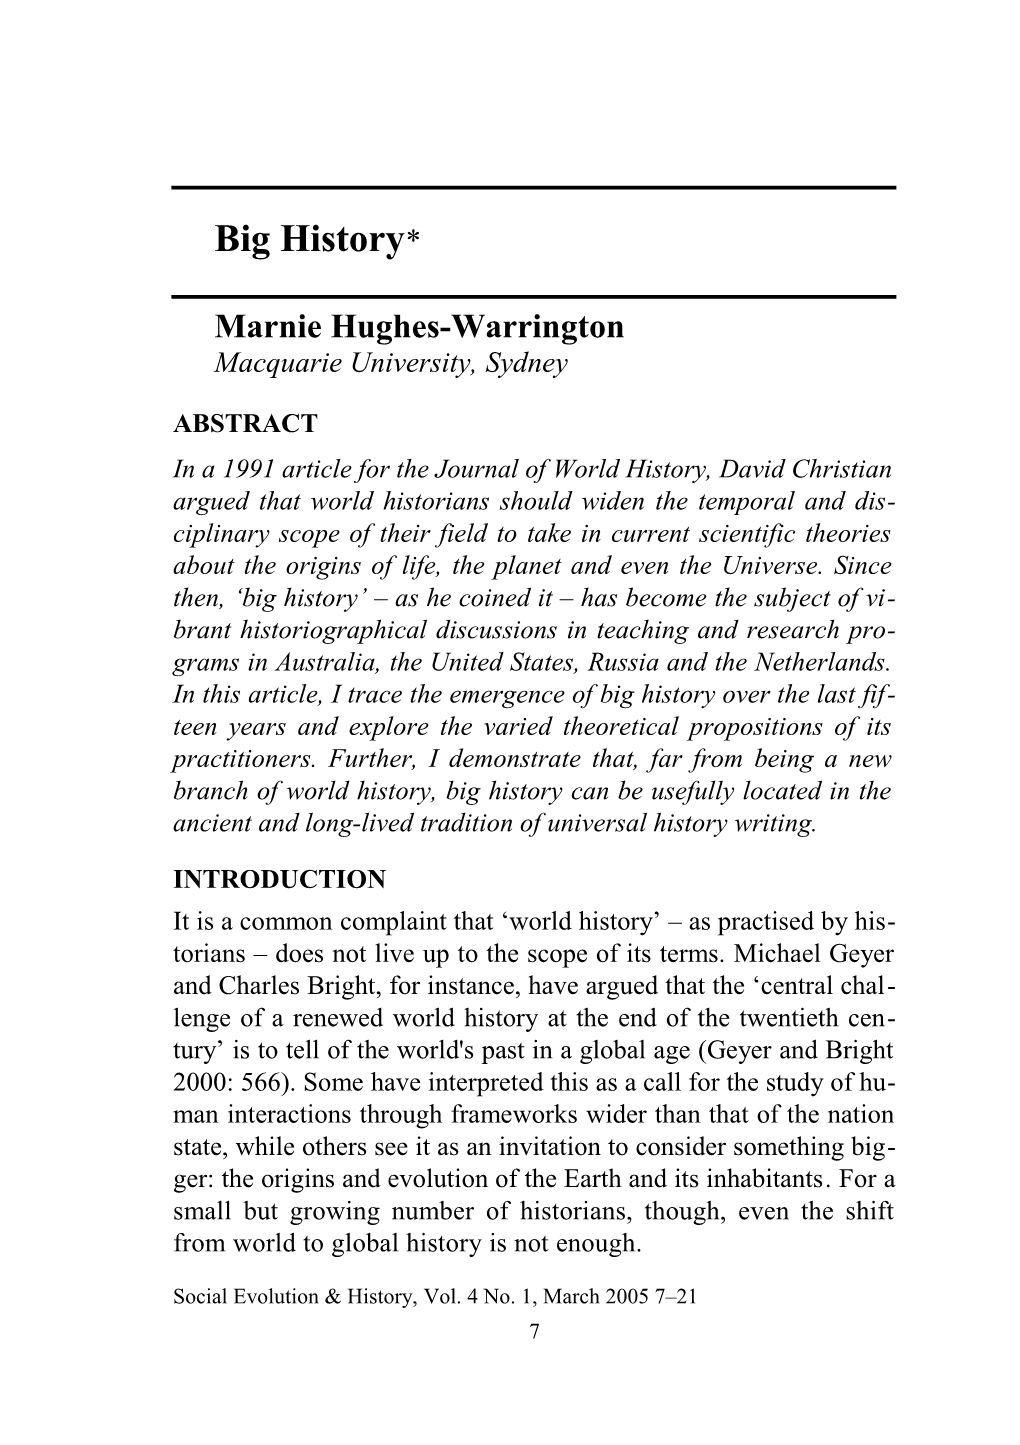 Hughes-Warrington / Big History